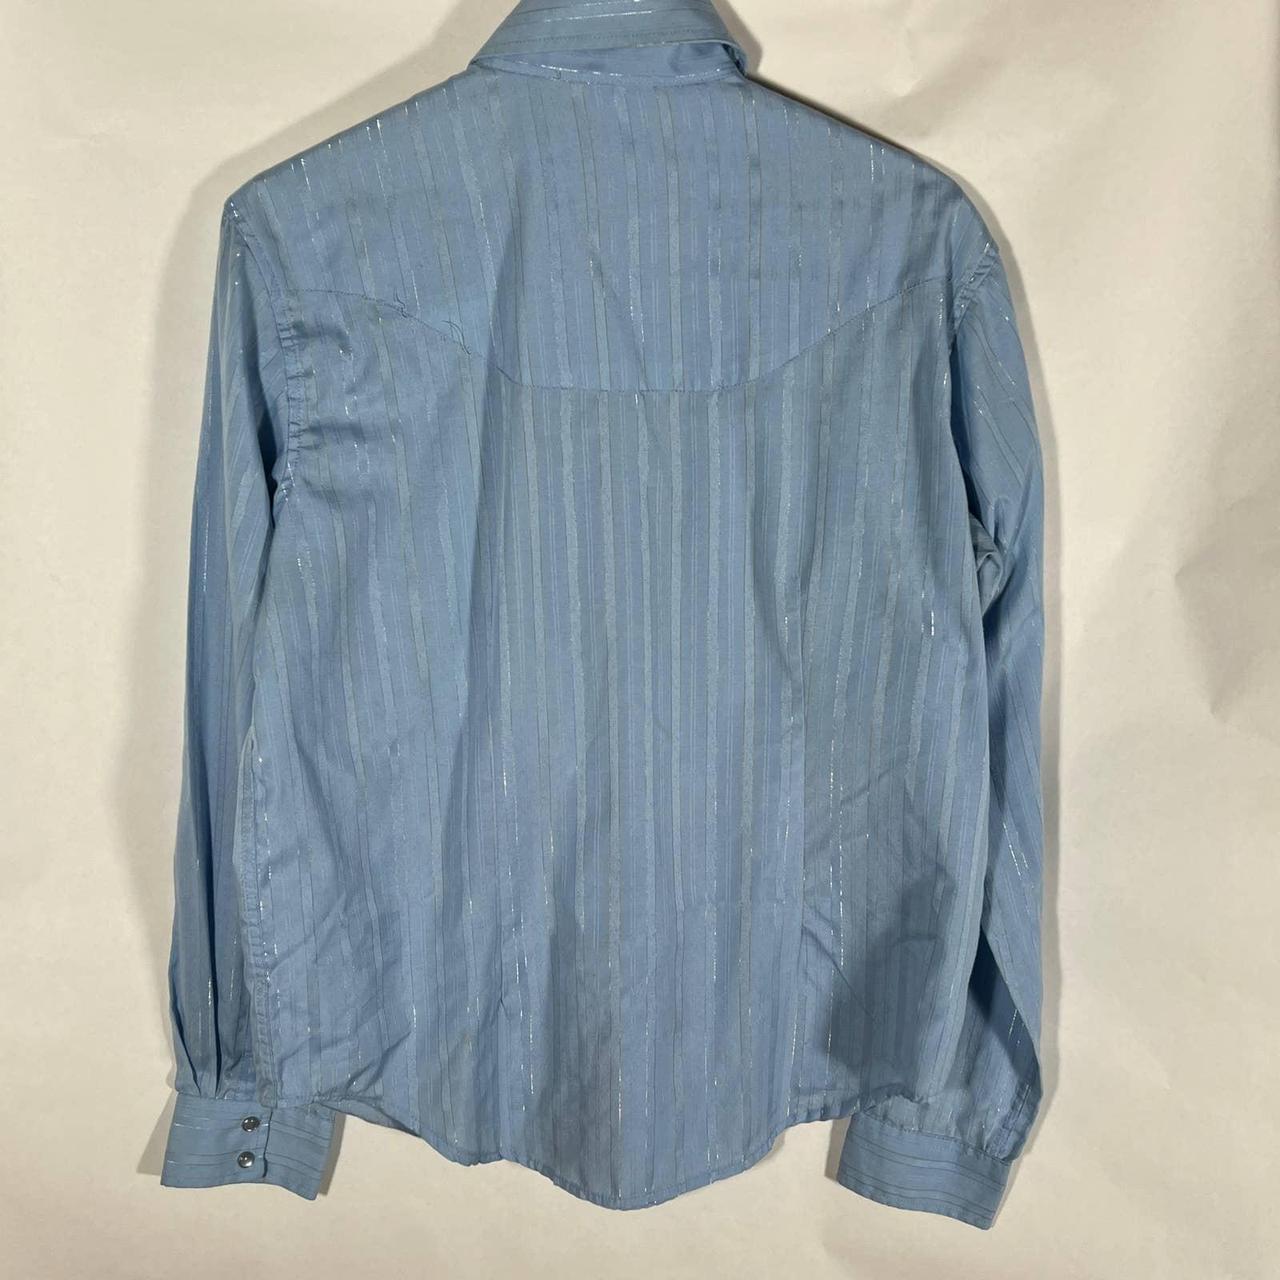 Product Image 4 - 1980s Saxifon Western Shirt Blue